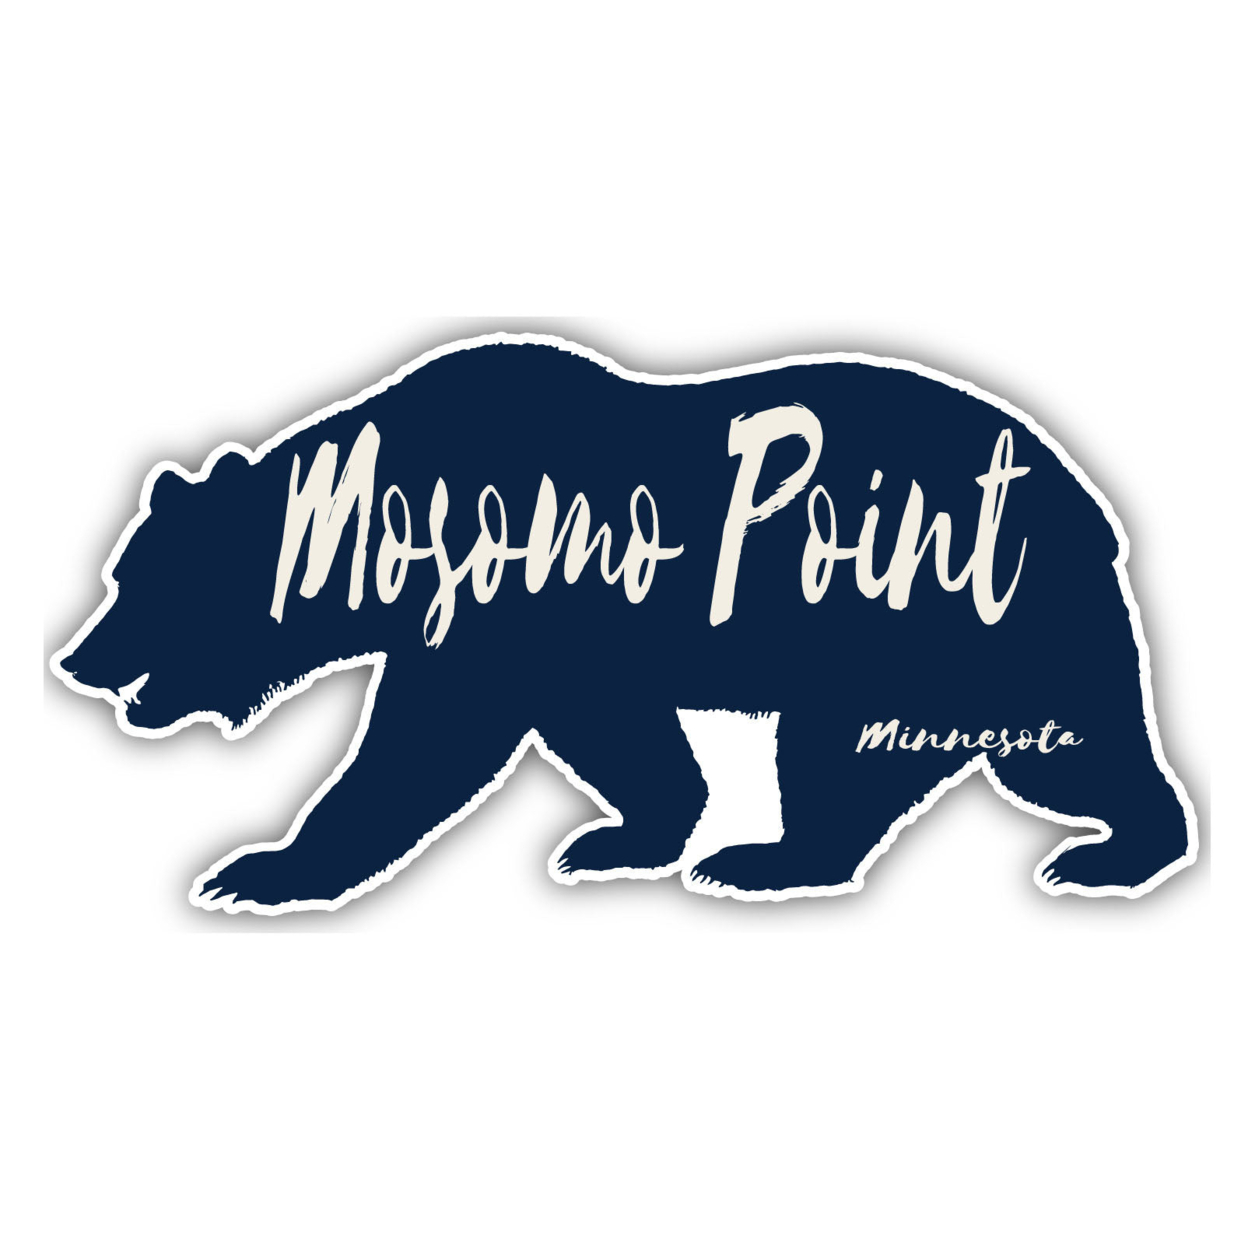 Mosomo Point Minnesota Souvenir Decorative Stickers (Choose Theme And Size) - Single Unit, 4-Inch, Bear